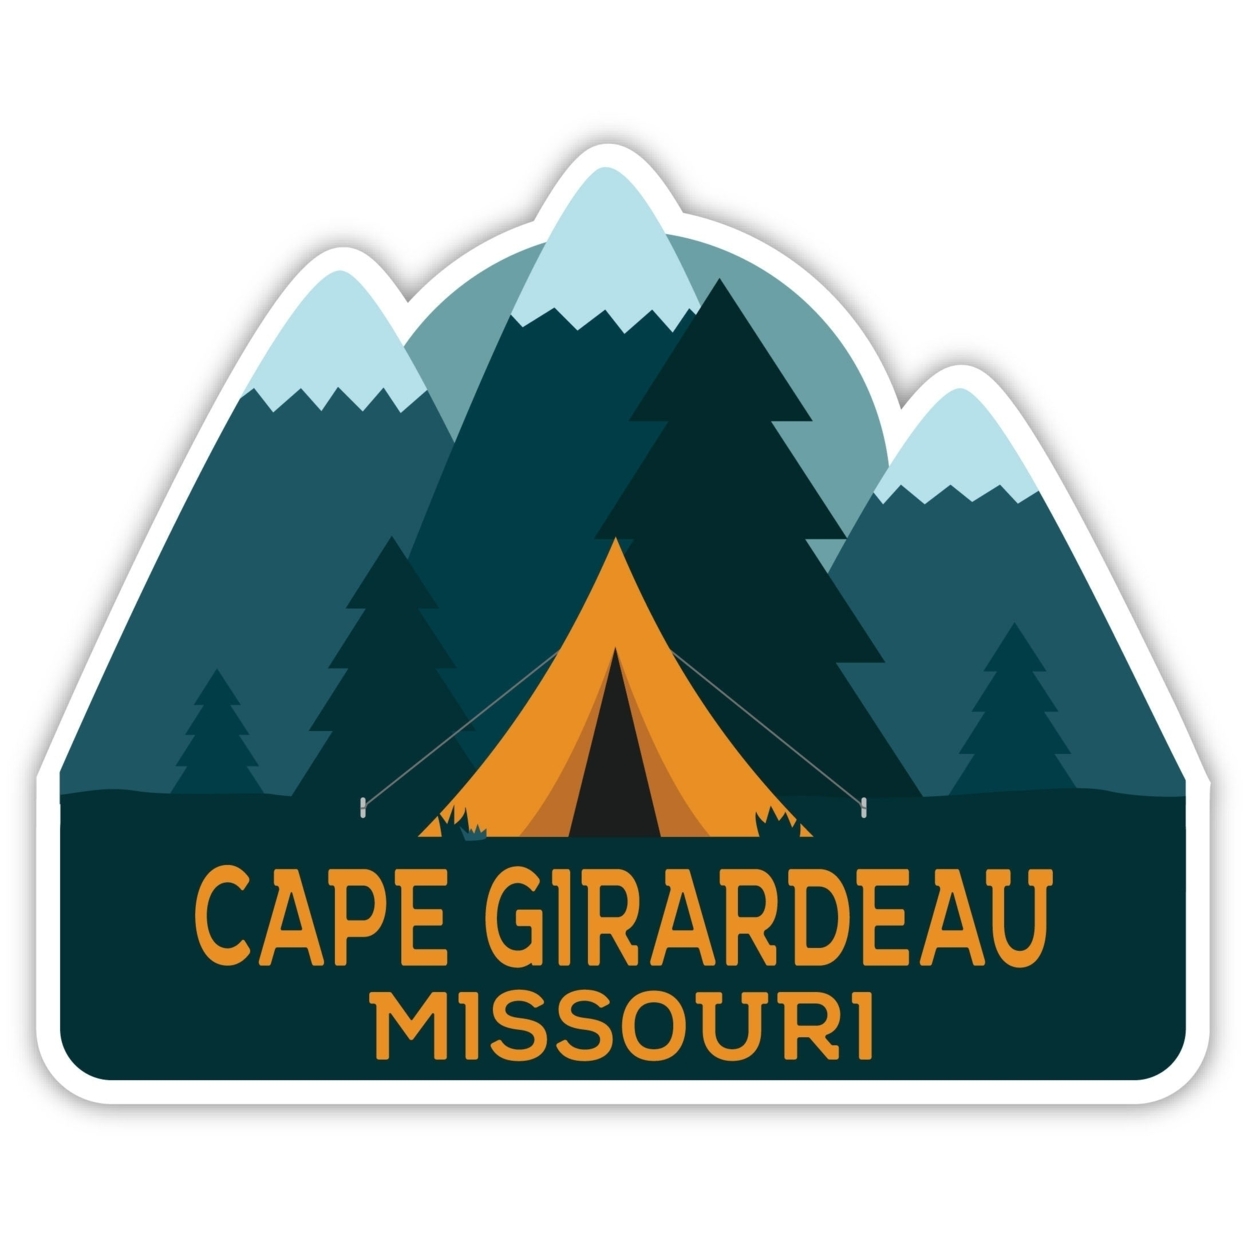 Cape Girardeau Missouri Souvenir Decorative Stickers (Choose Theme And Size) - 4-Pack, 8-Inch, Tent